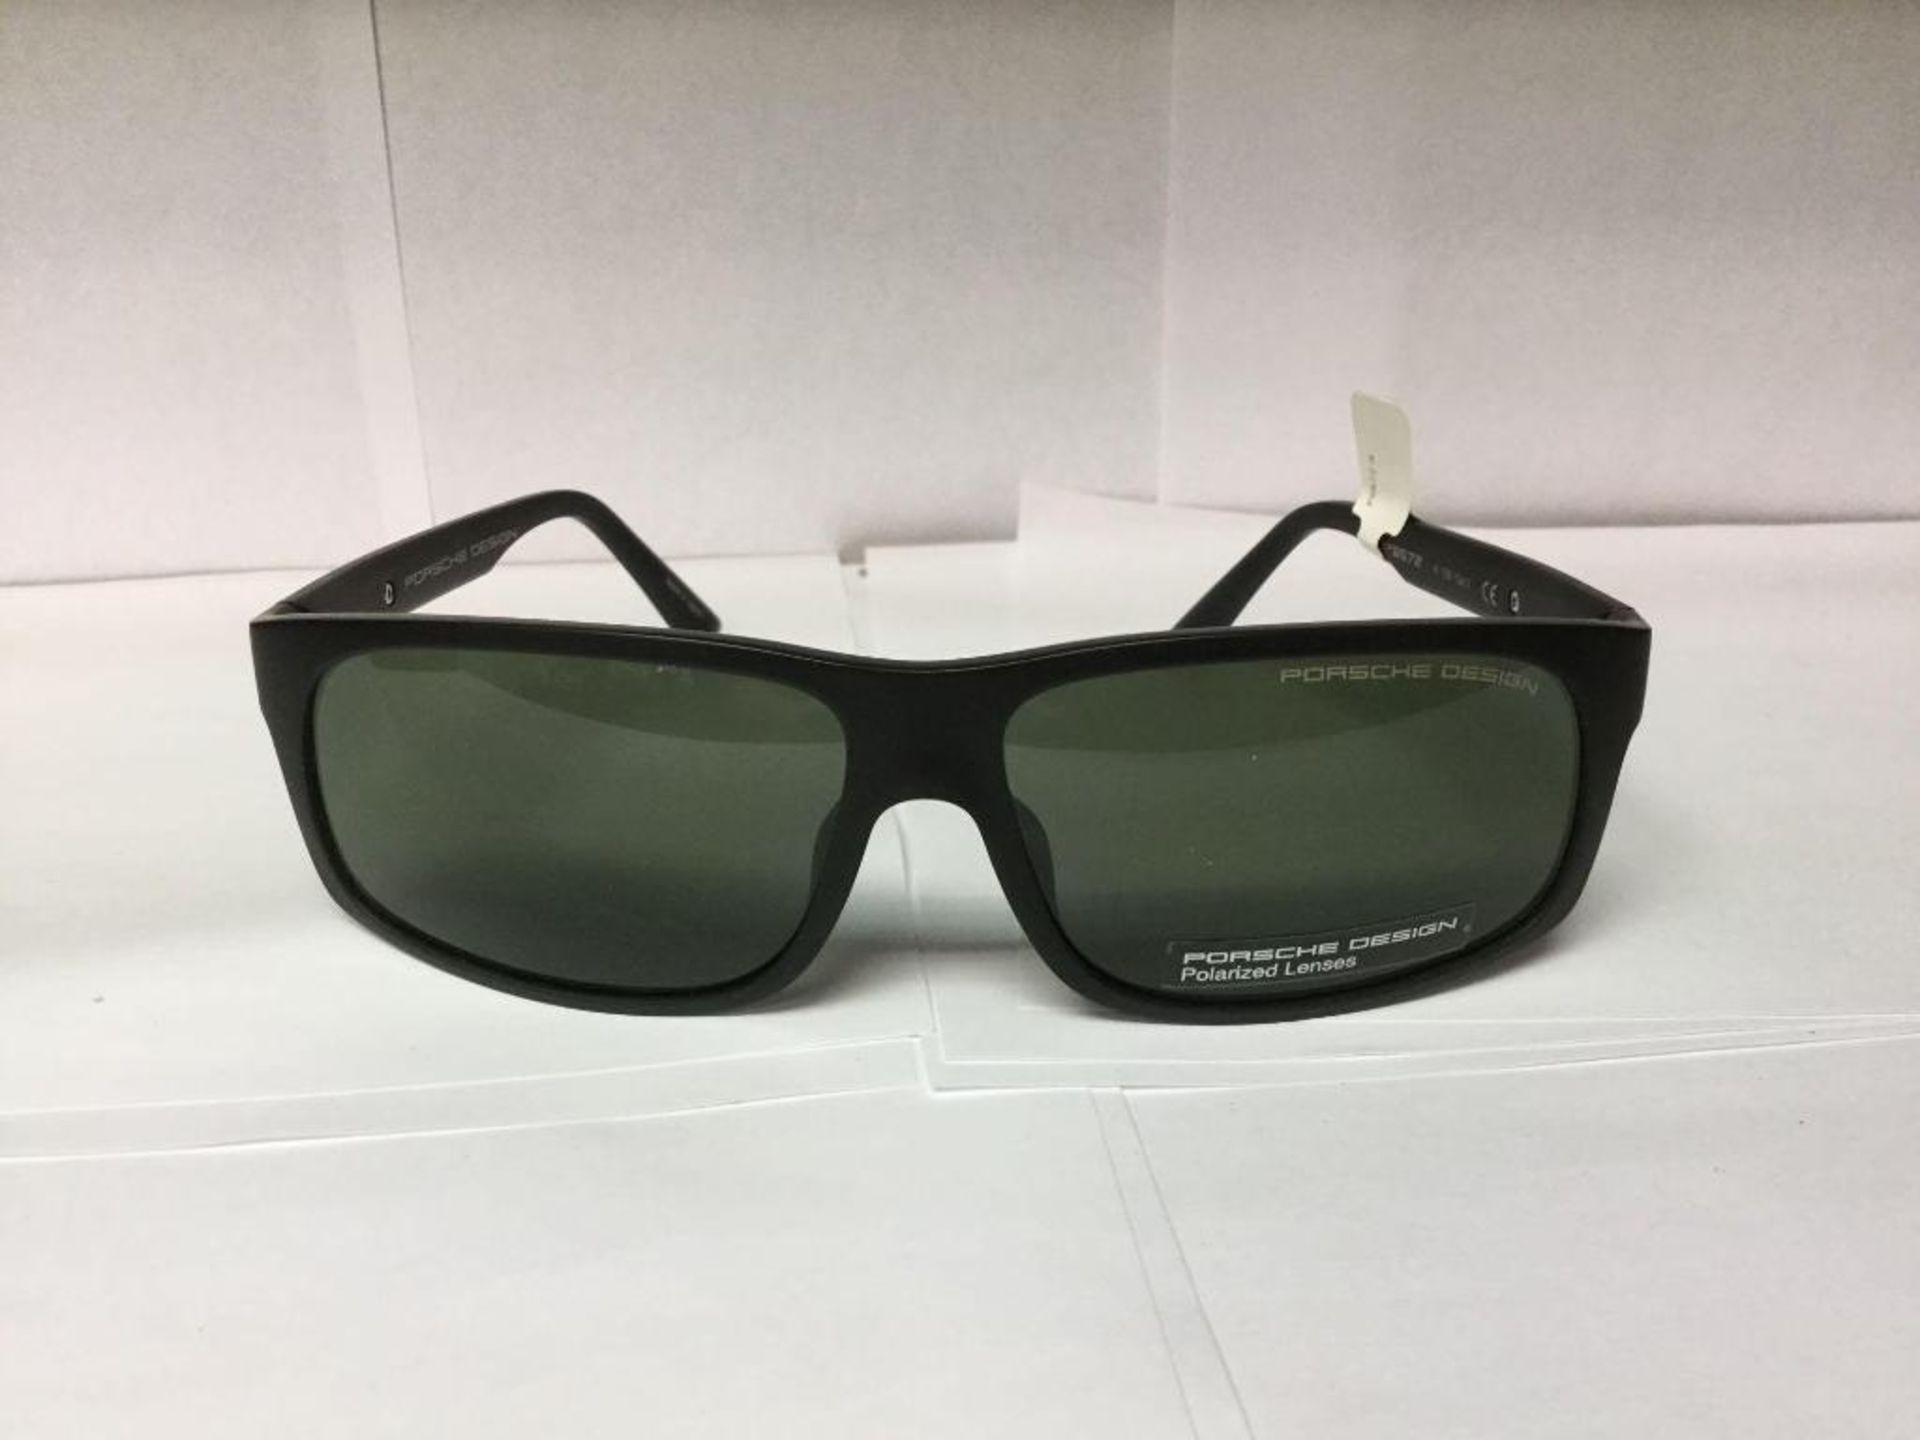 Porsche Design Sunglasses with Box and Case - Value $460 - Image 3 of 3